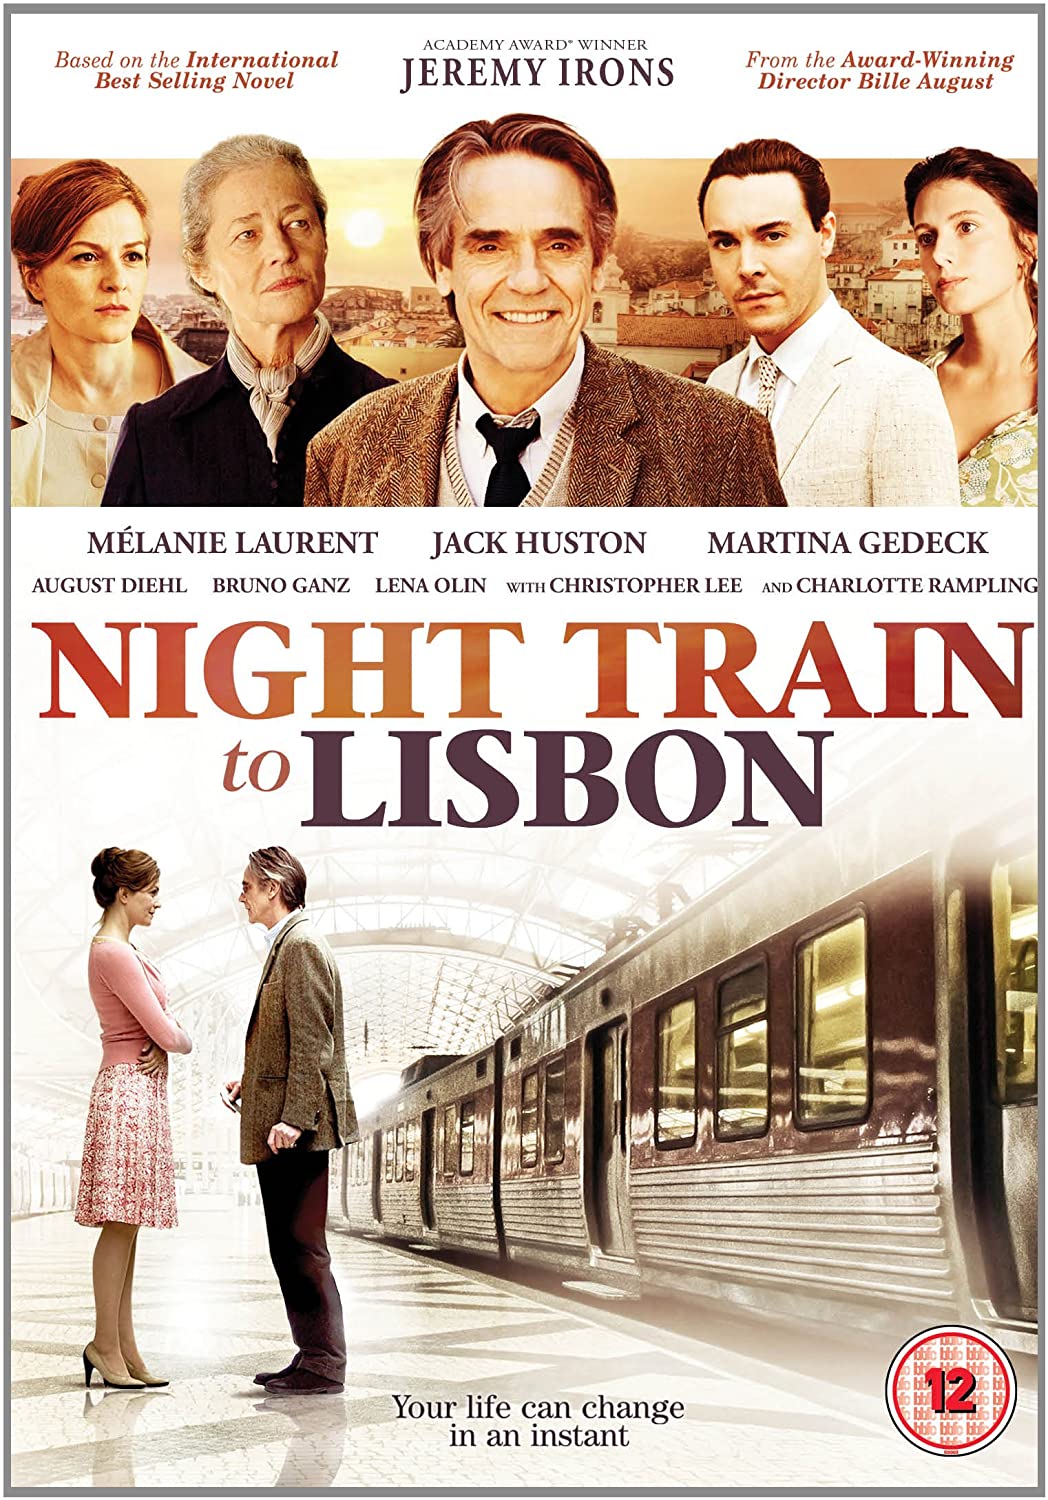 Night Train To Lisbon - Drama/Romance [DVD]